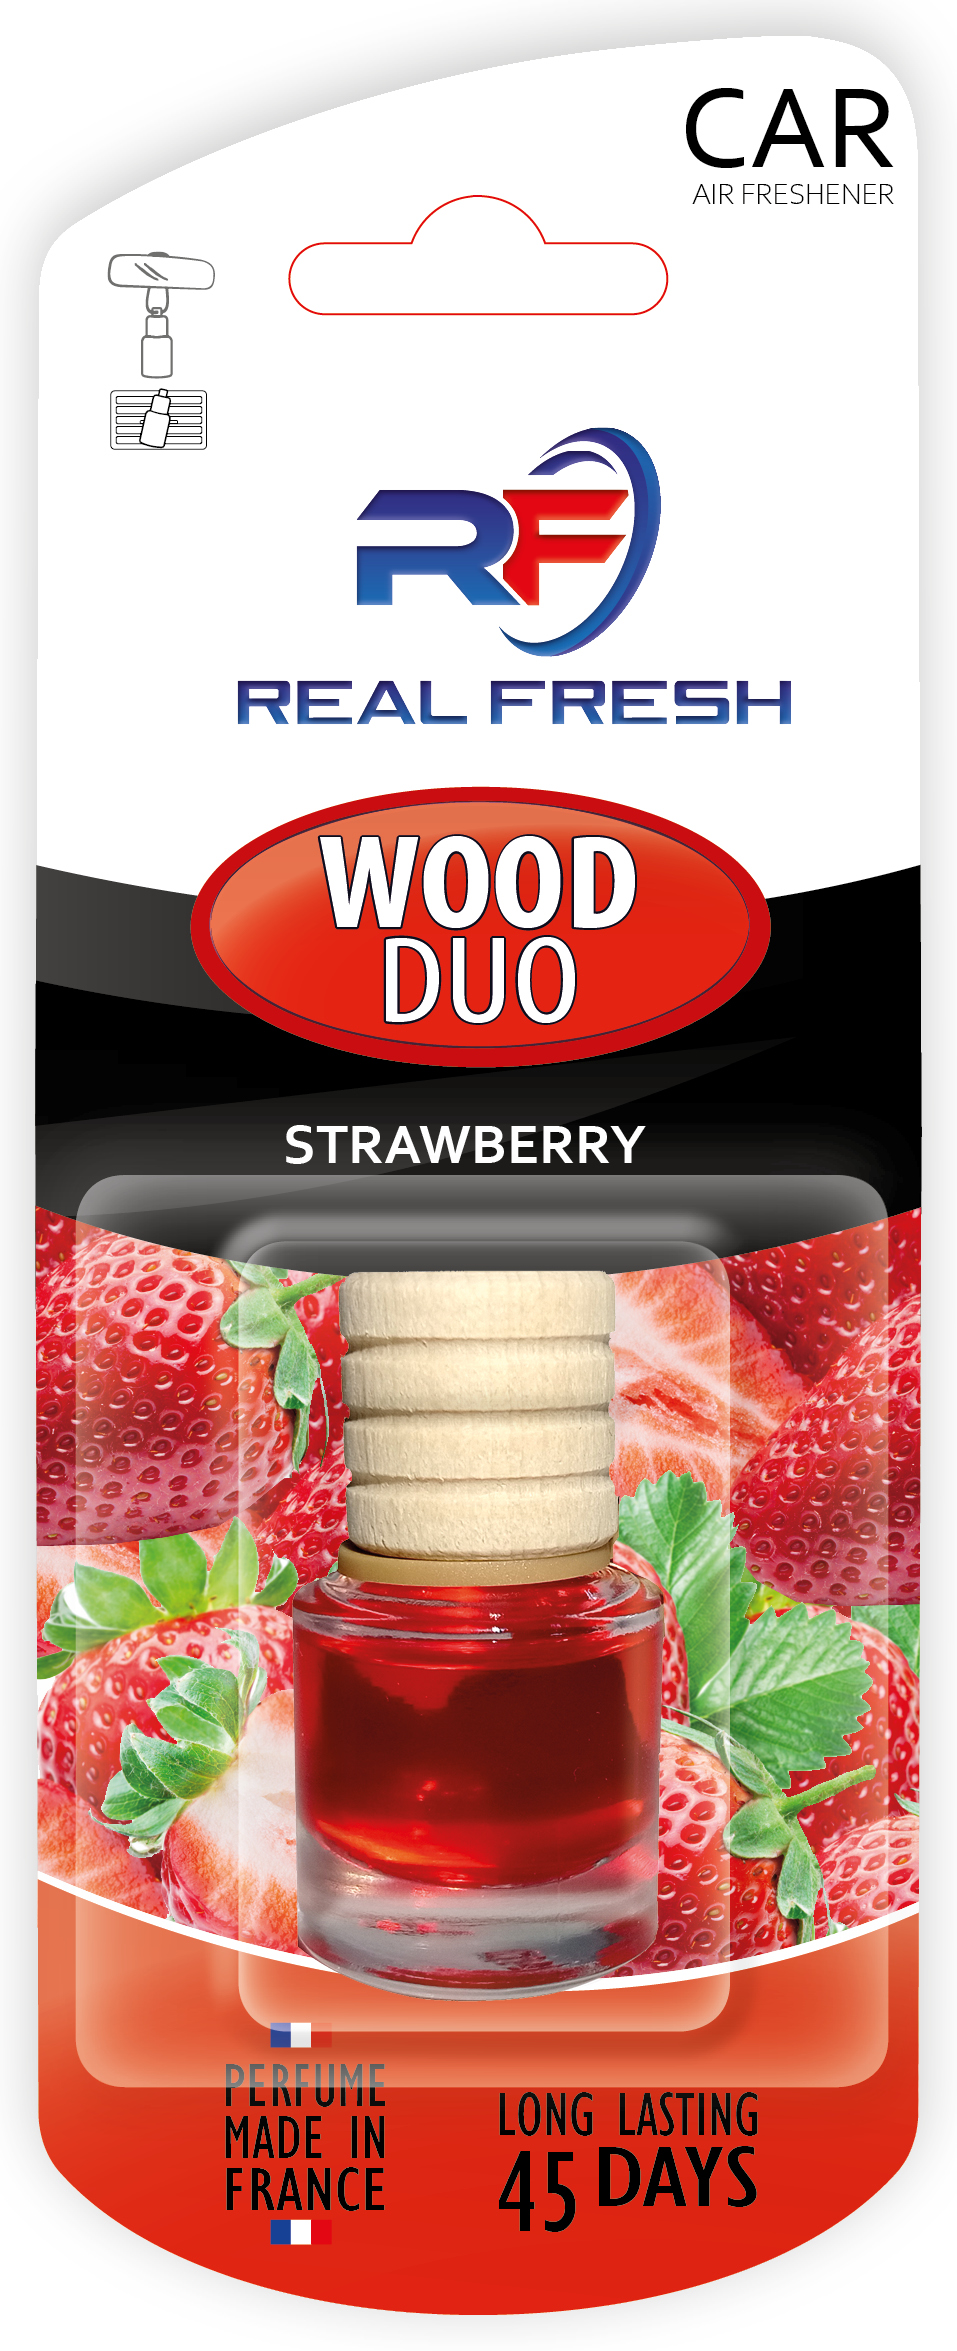 WOOD DUO Strawberry Image